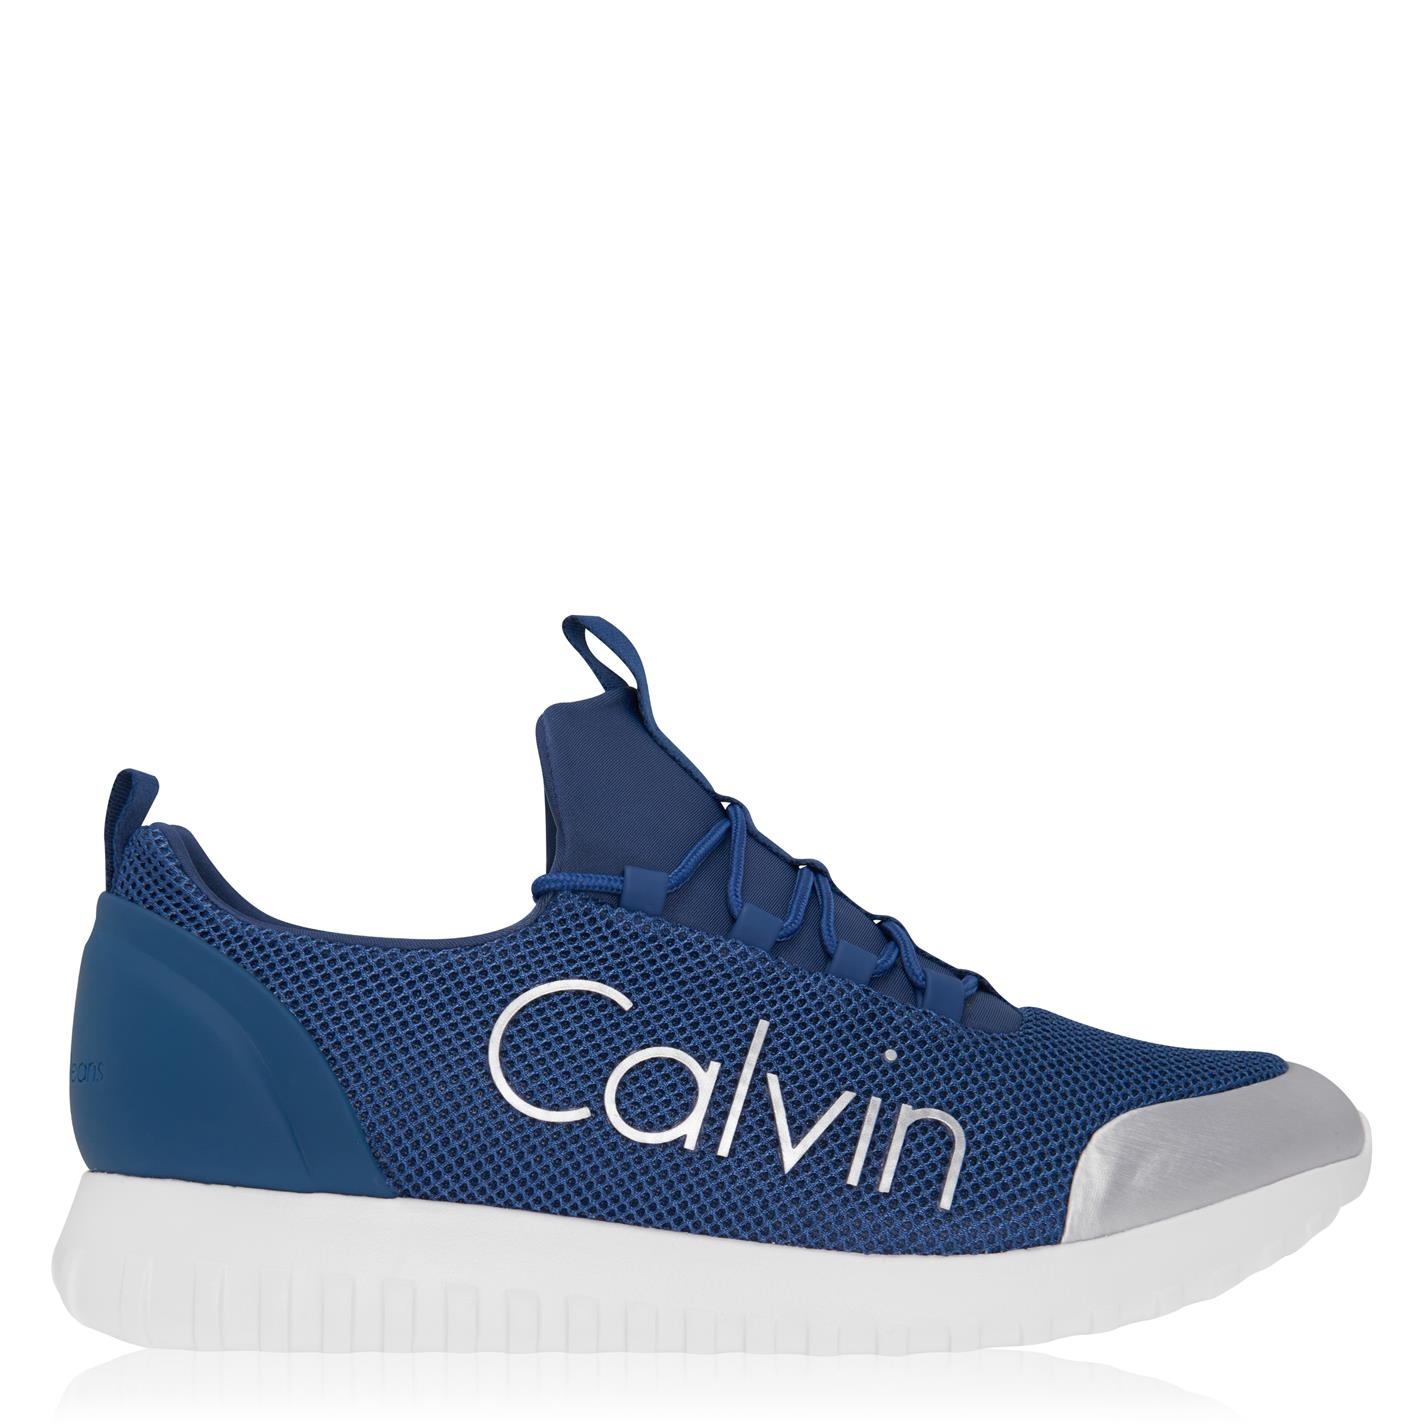 Adidasi sport Calvin Klein Jeans Ron Low Top gri albastru